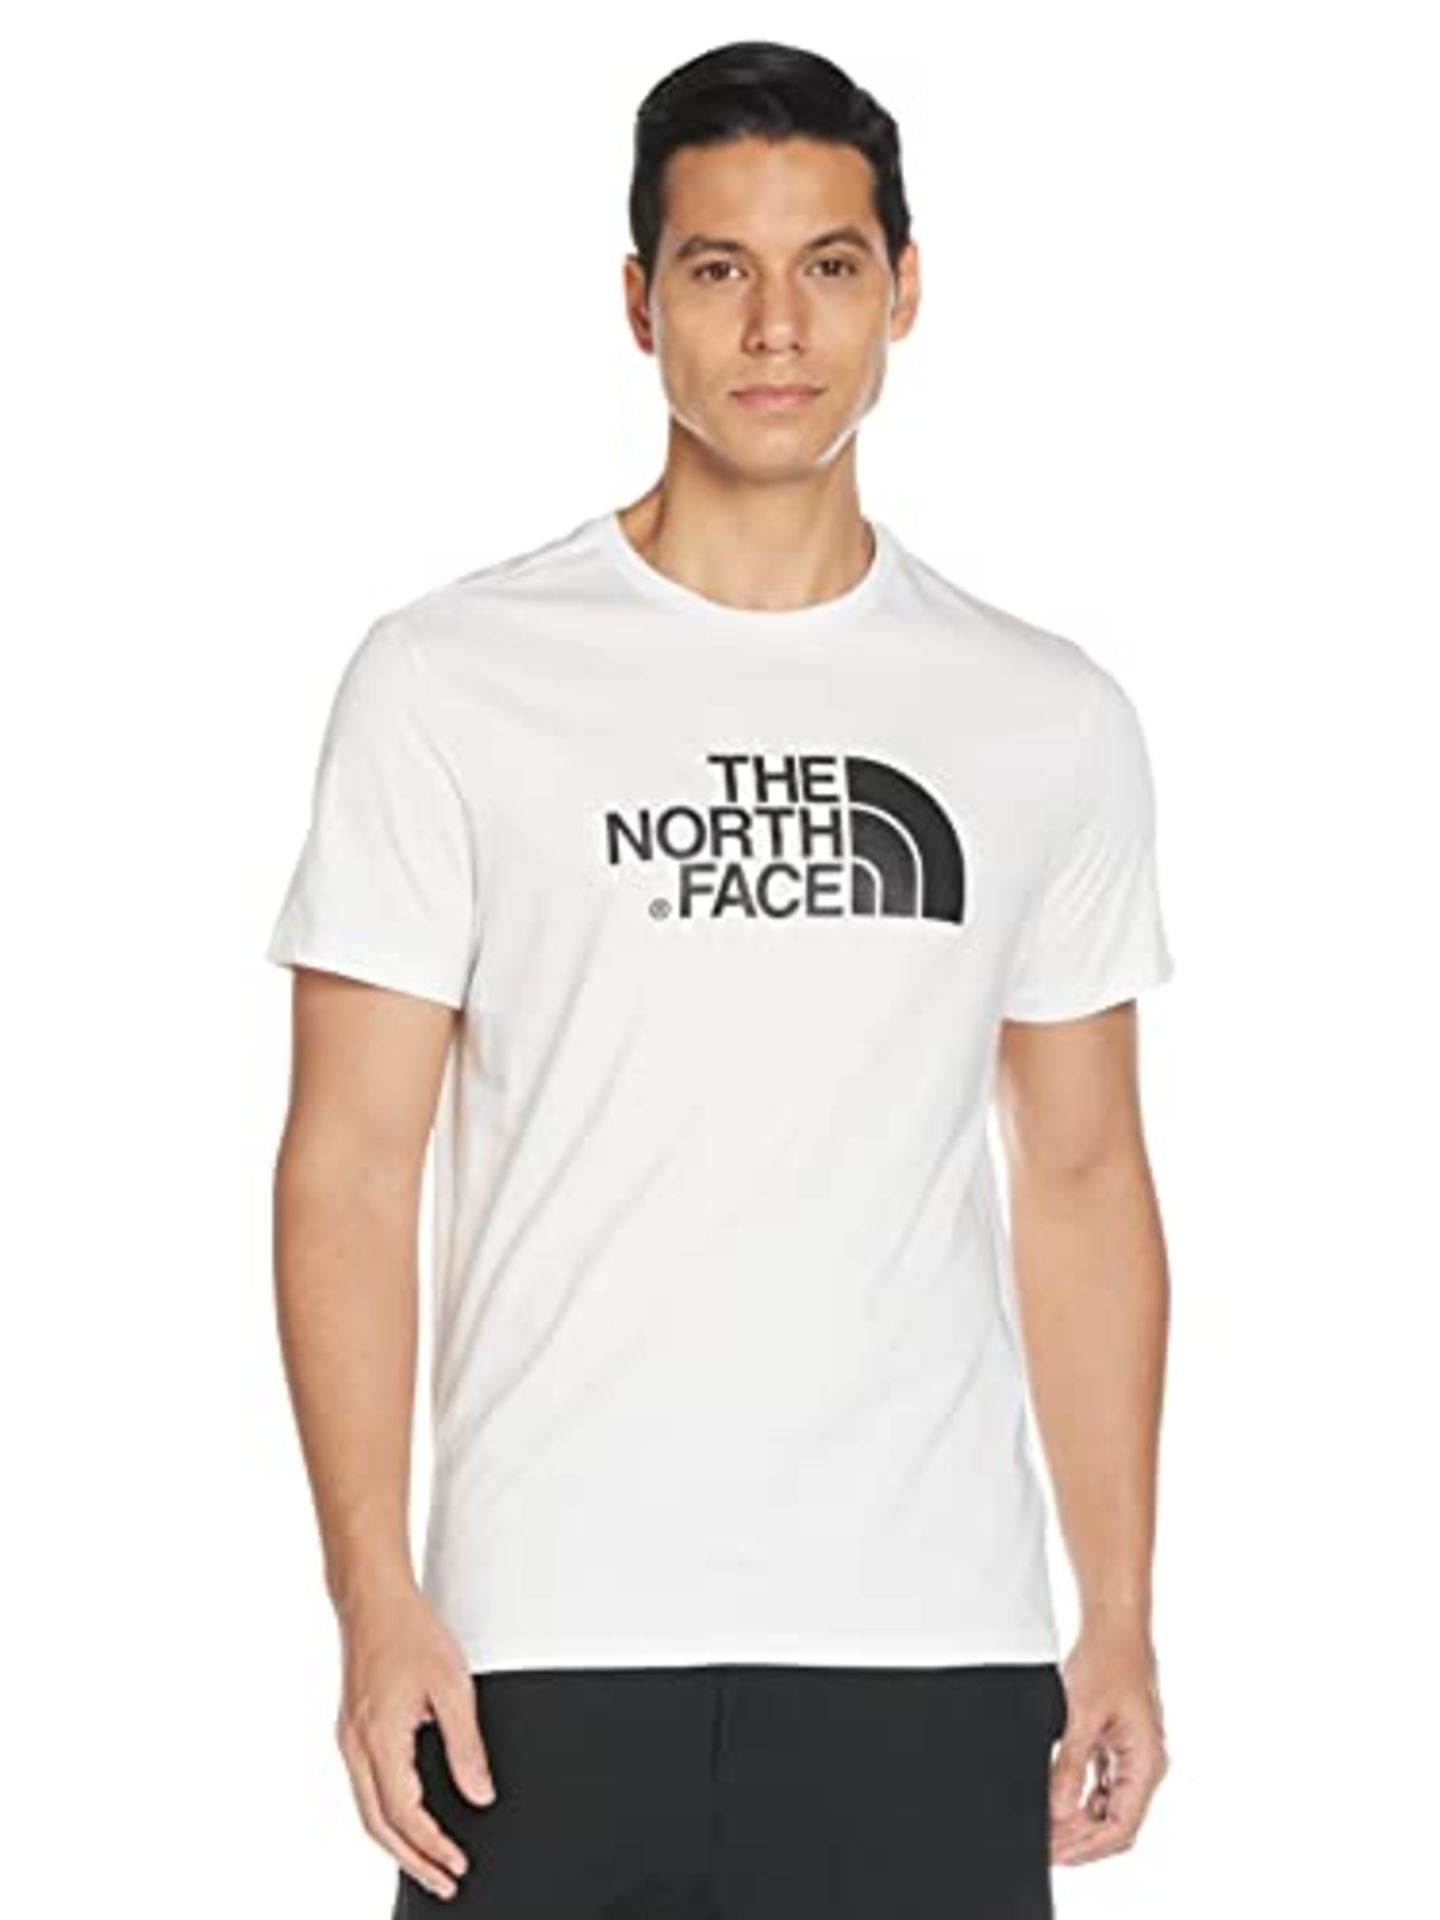 The North Face T-Shirt Easy, Men, TNF White, M